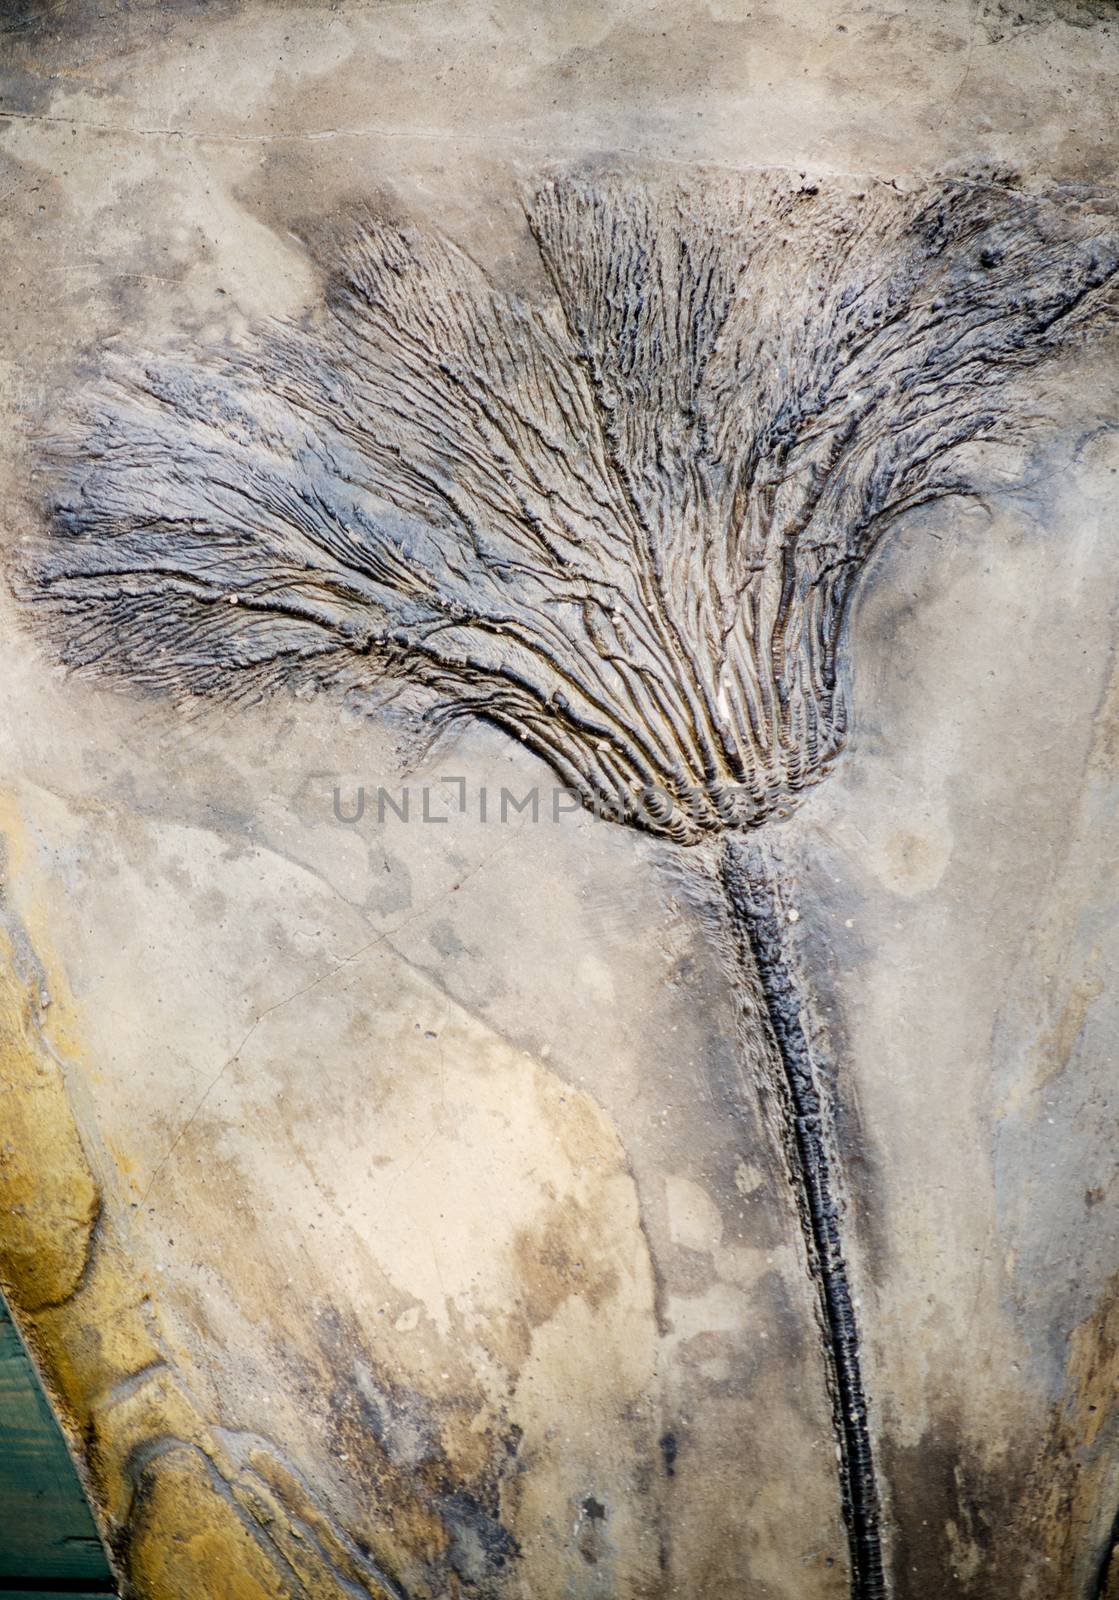 Seirocrinus subangularis  fossil